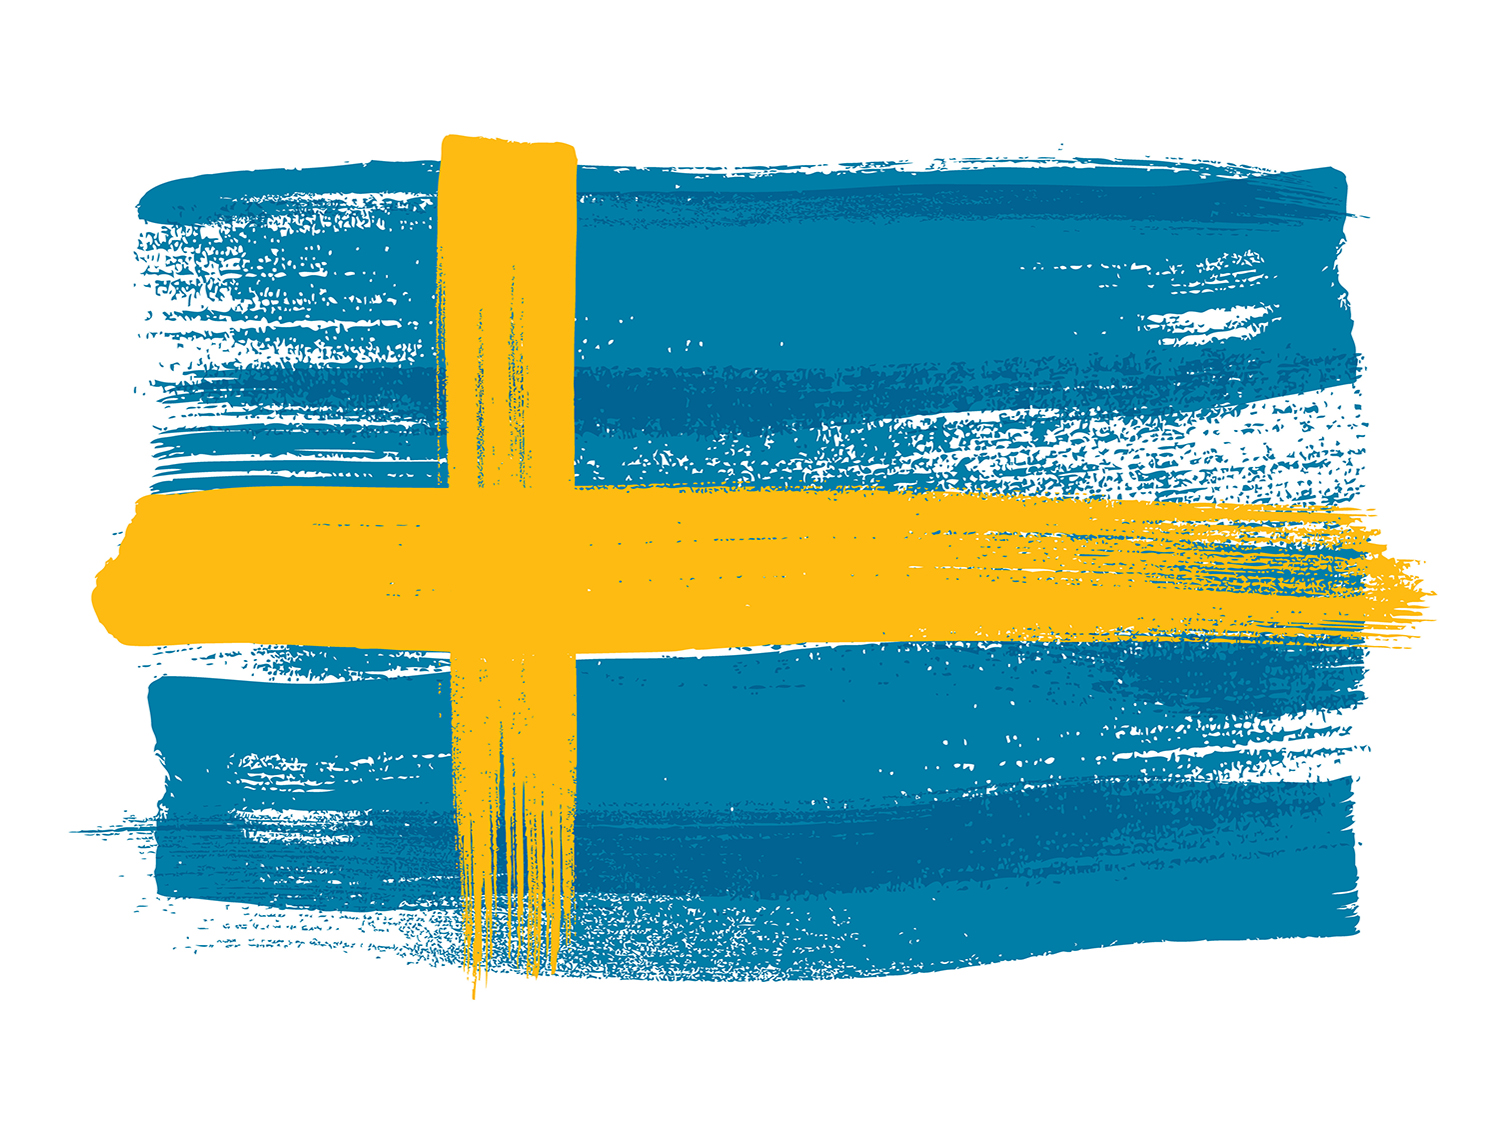 Sweden seeks sustainability through collaboration